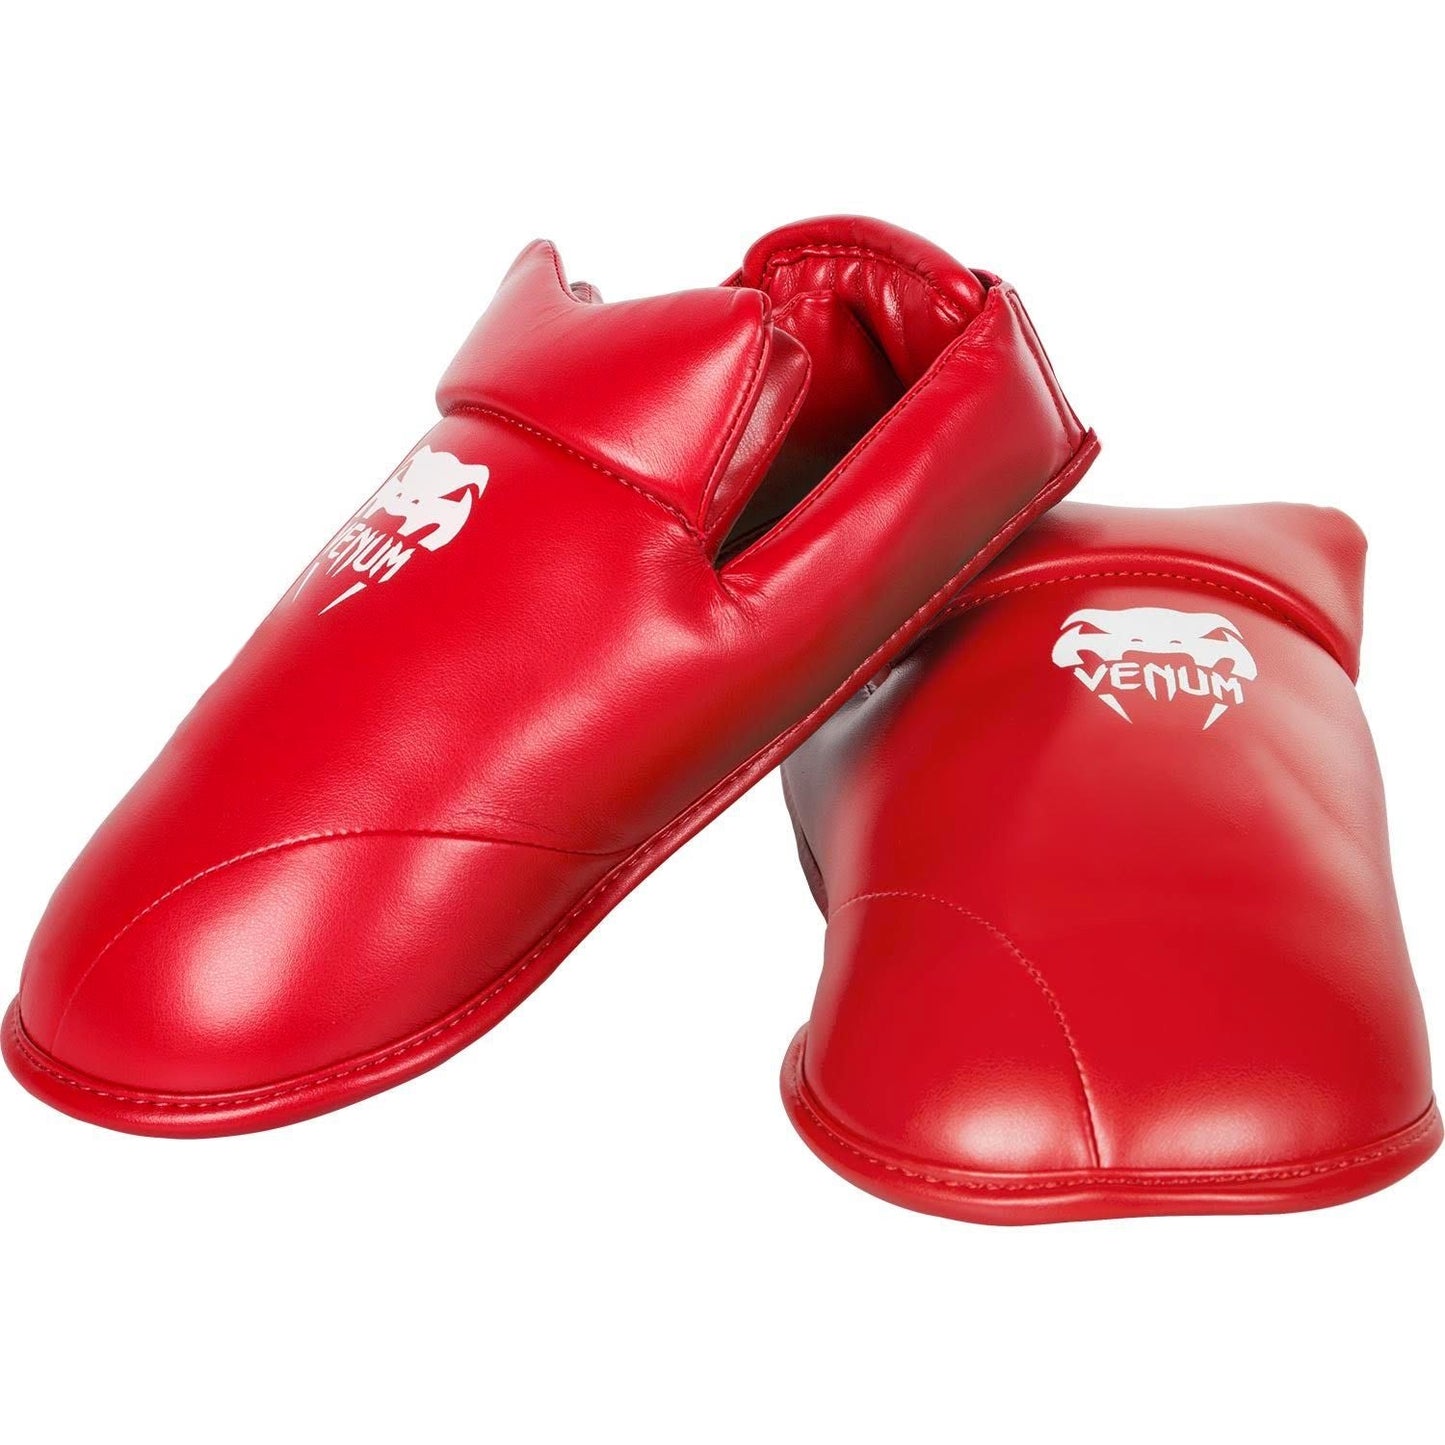 Venum Karate Shin Pad & Foot Protector - Red